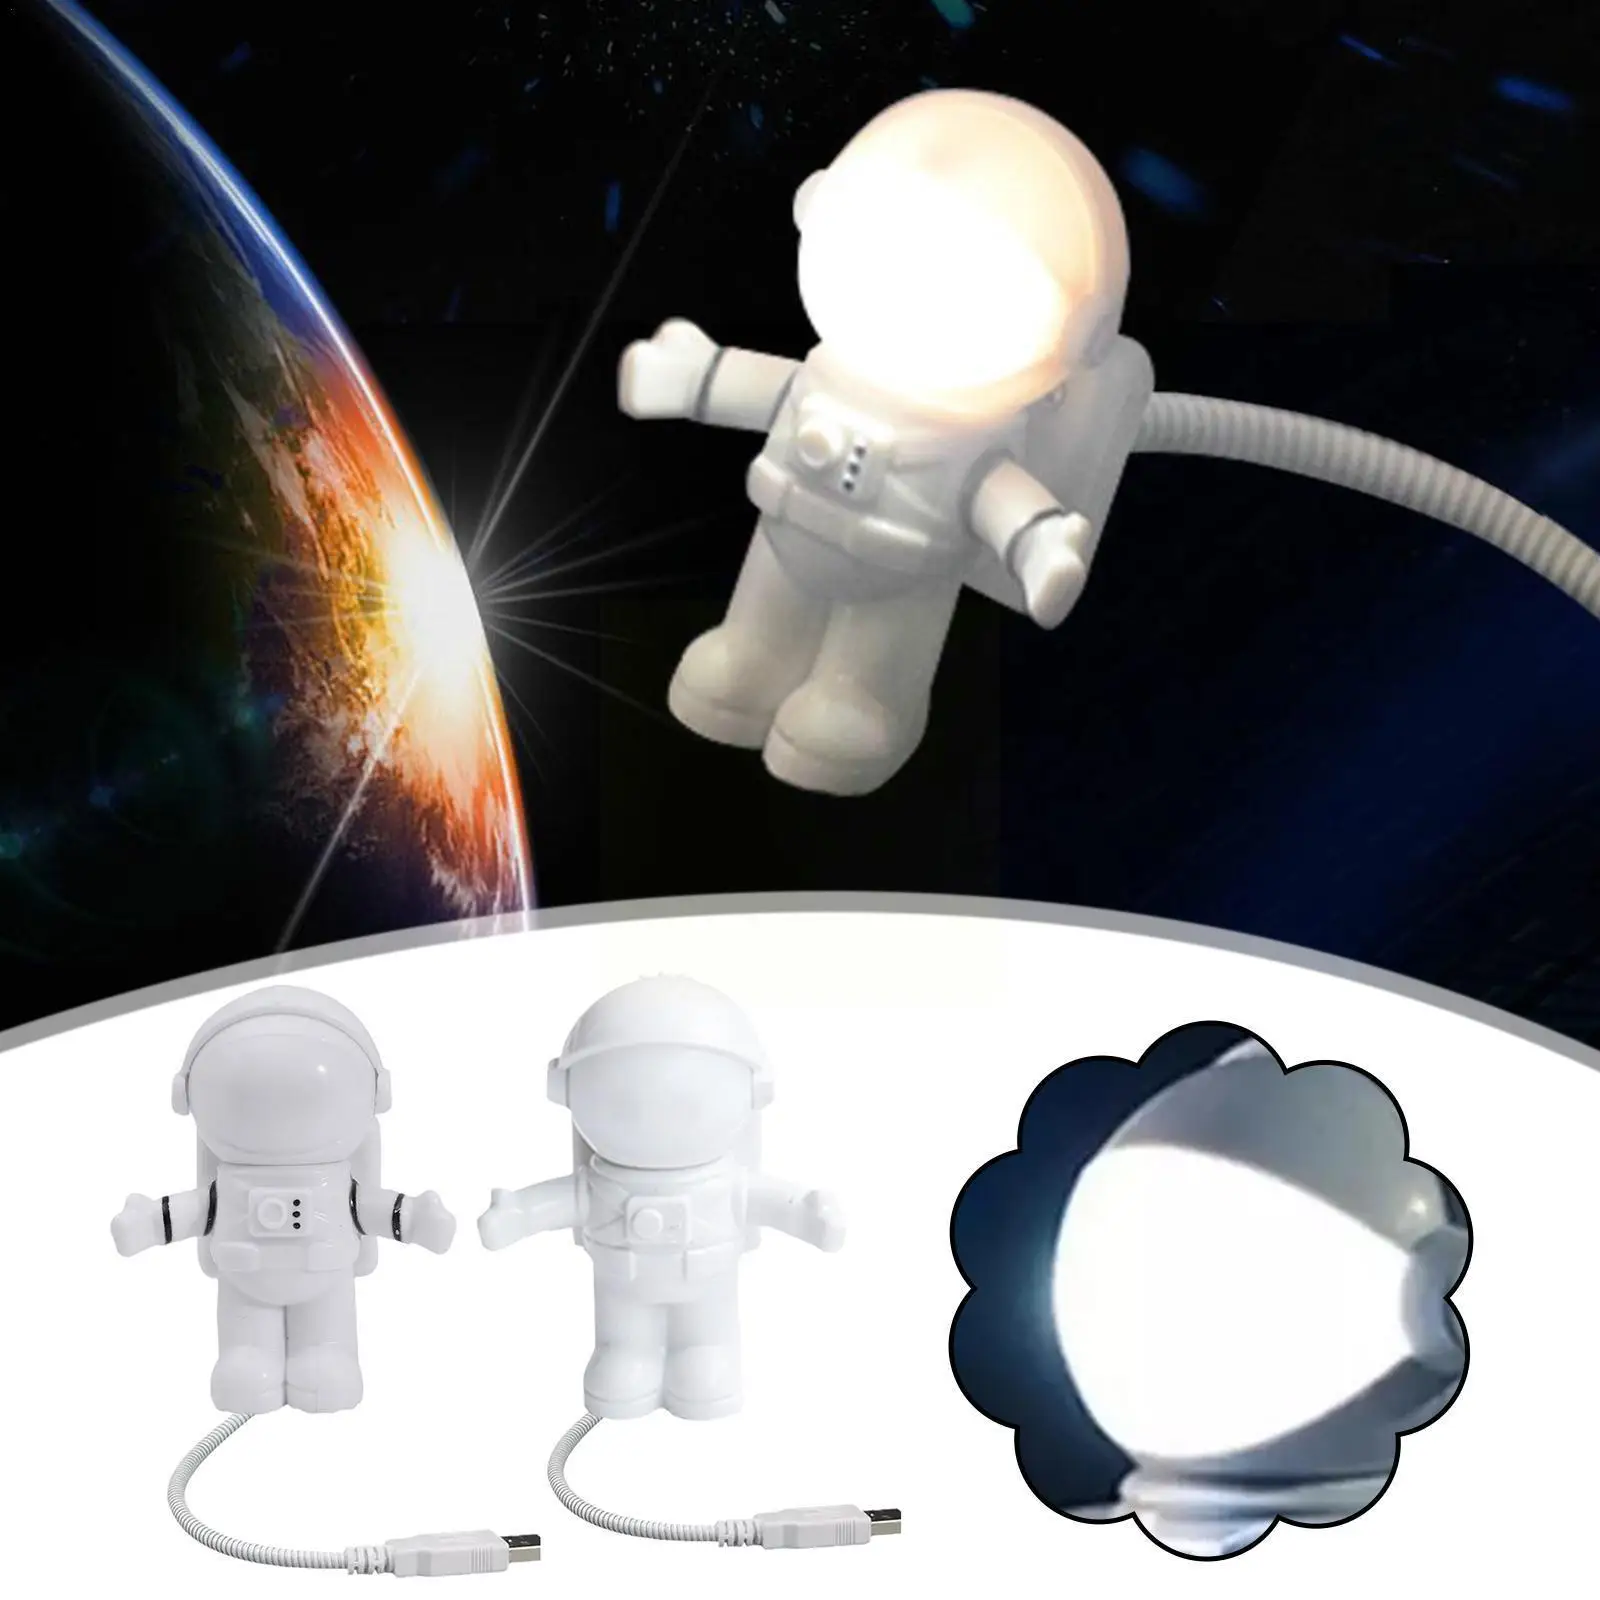 

1pc Night Light Funny Astronaut Spaceman USB LED Light Adjustable Night Light Gadgets For Home Lamp Room Decor Nightlights U1C6